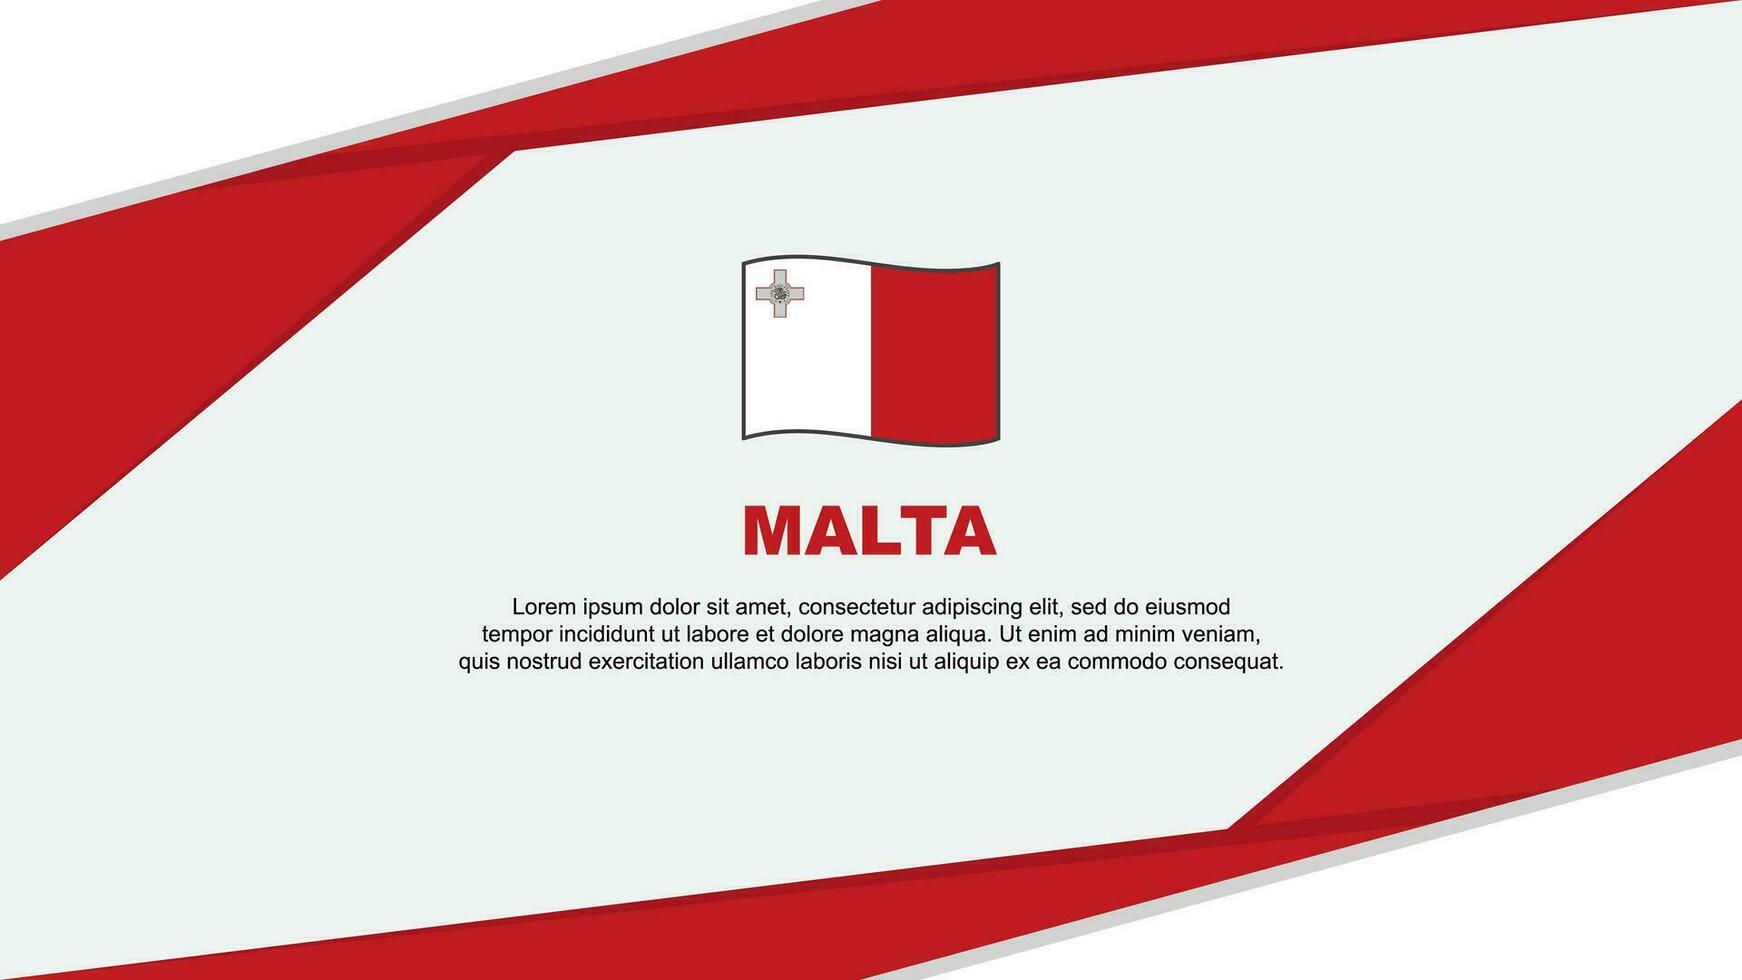 Malta Flag Abstract Background Design Template. Malta Independence Day Banner Cartoon Vector Illustration. Malta